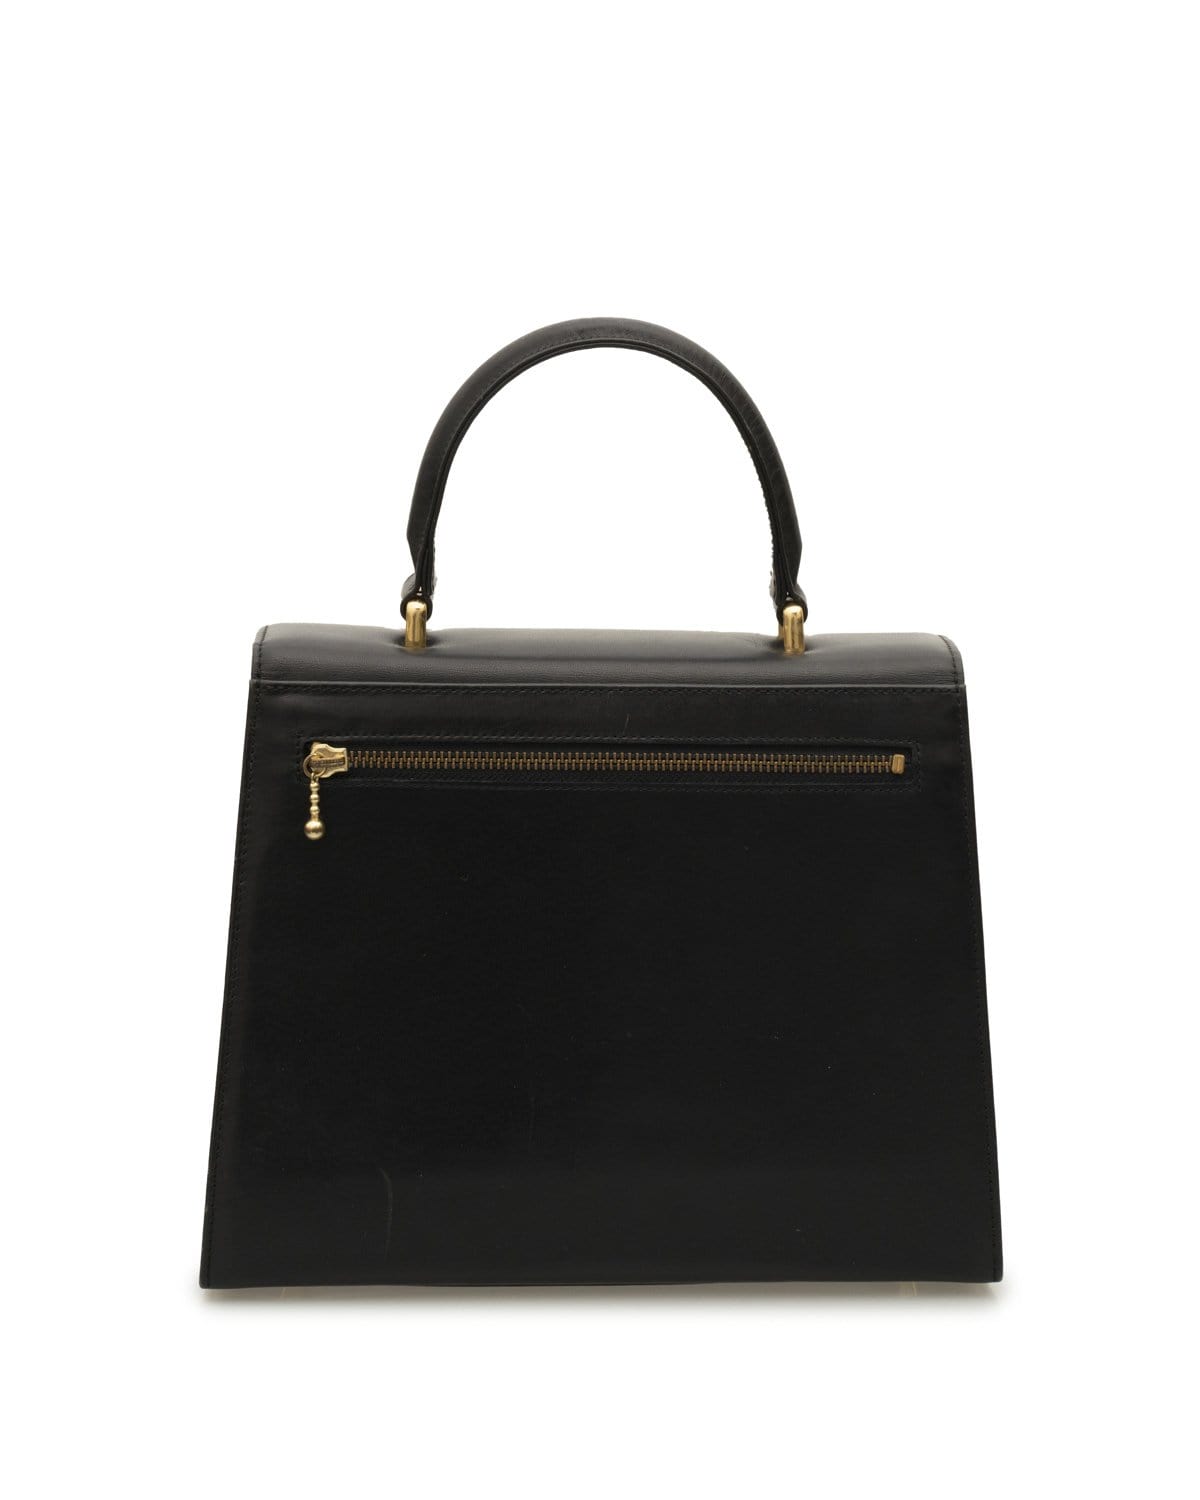 Versace Vintage Gianni Versace classic black handbag with golden buckle motif and a shoulder strap - AWC1093